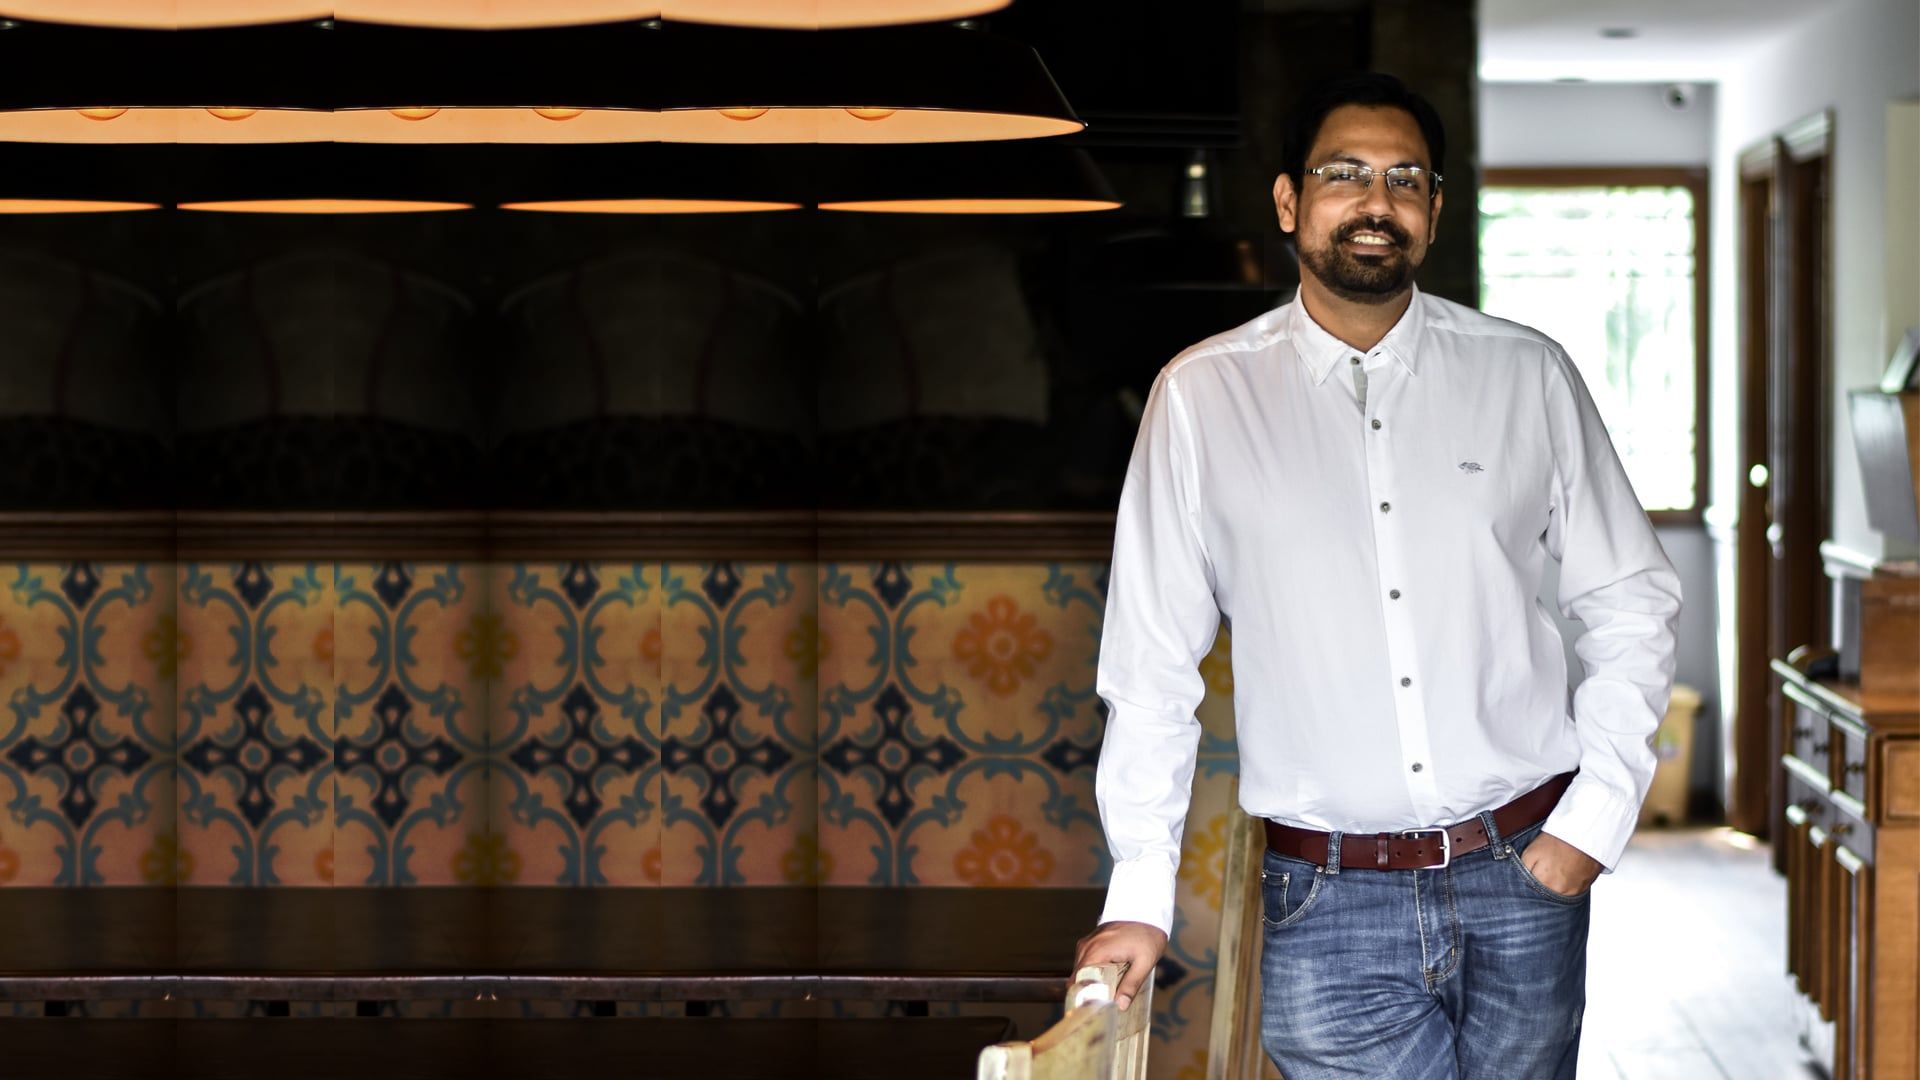 Arjun Sagar Gupta: The story of how one man created India’s top jazz bar